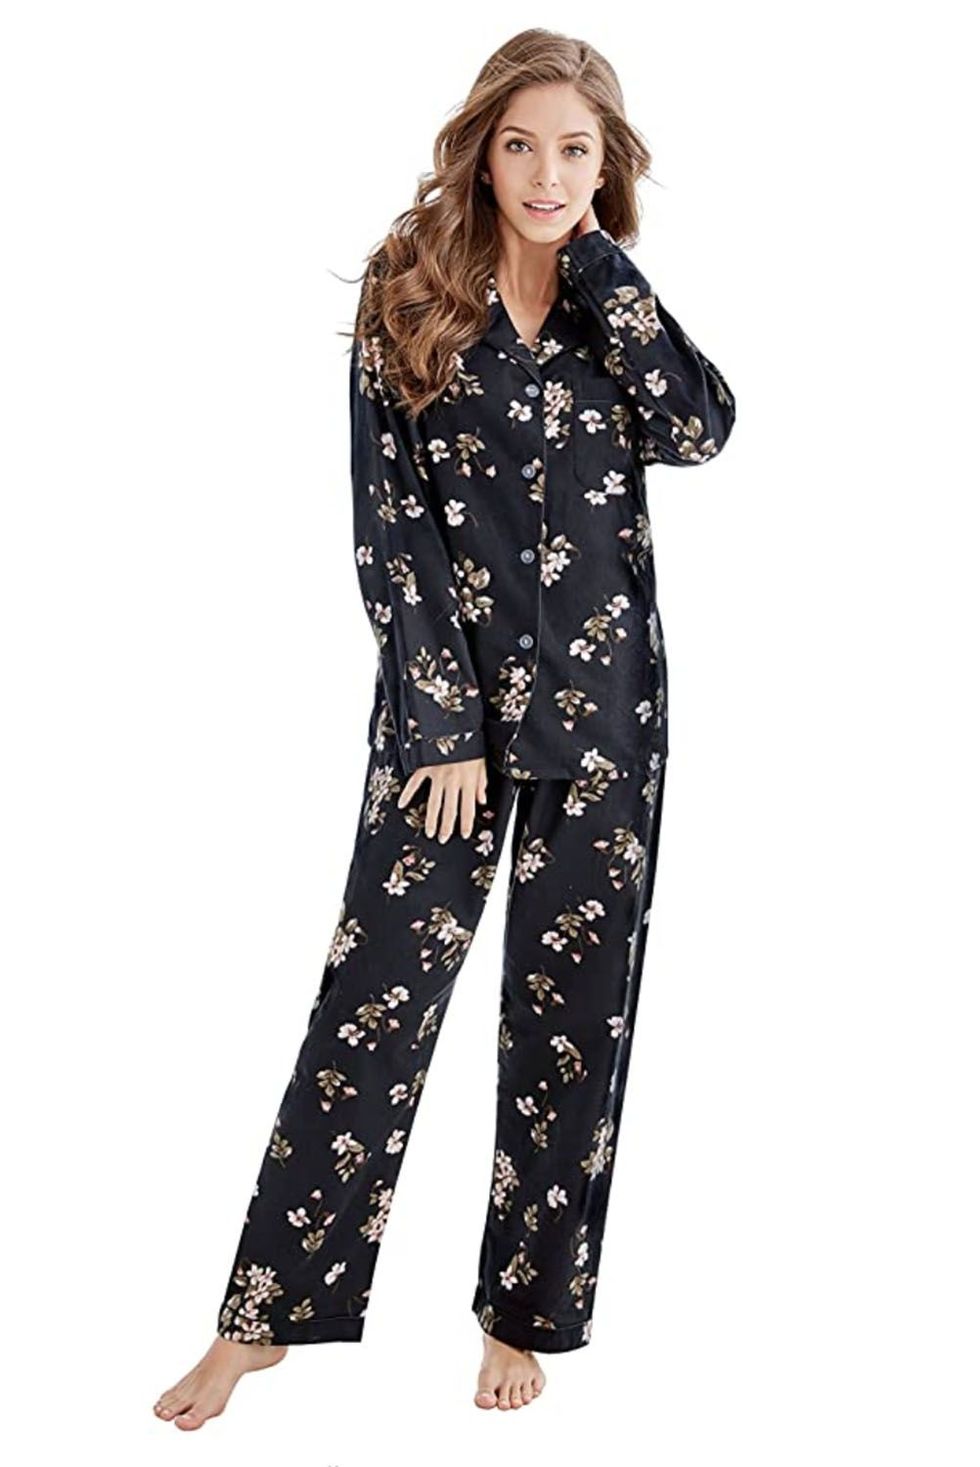 Black Floral Pajama Set